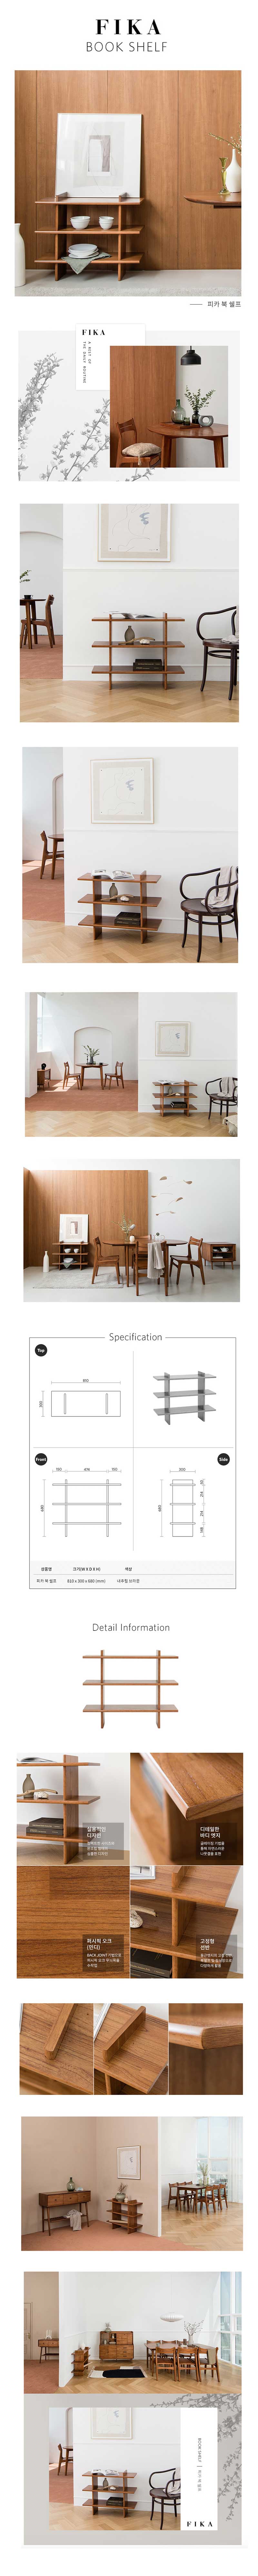 Fika Swedish minimalist bookshelf